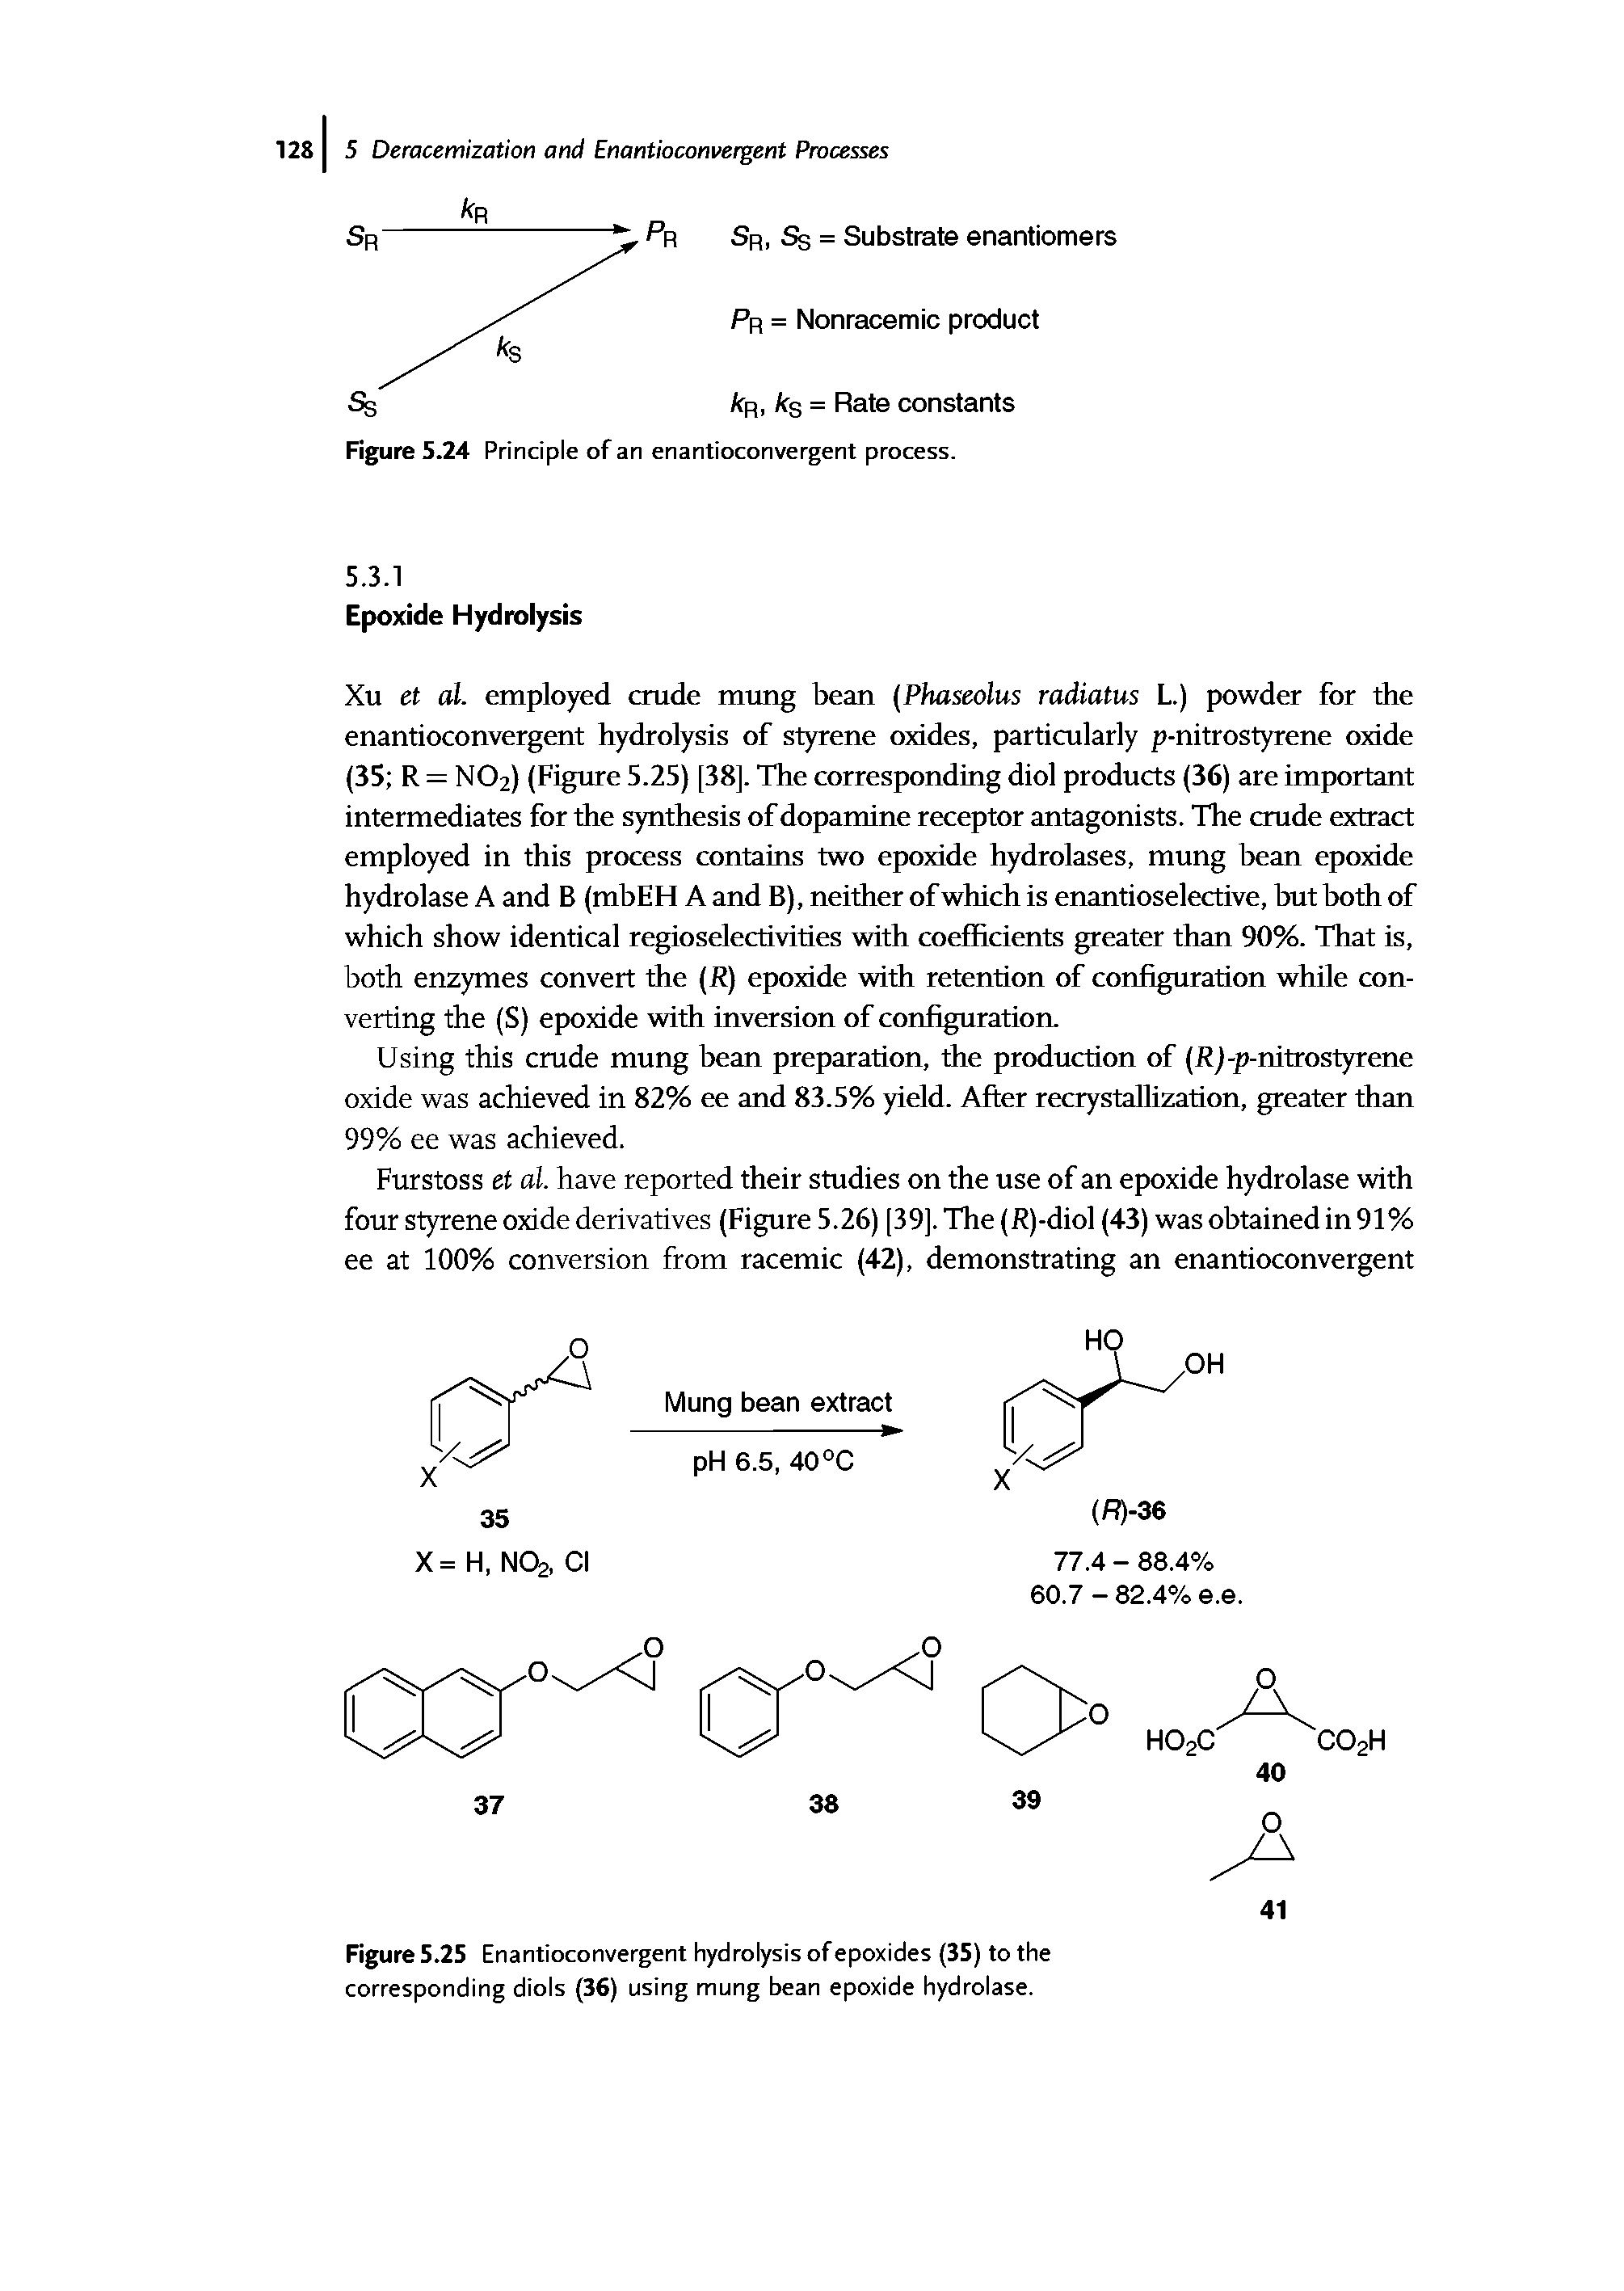 Figure 5.25 Enantioconvergent hydrolysis of epoxides (35) to the corresponding diols (36) using mung bean epoxide hydrolase.